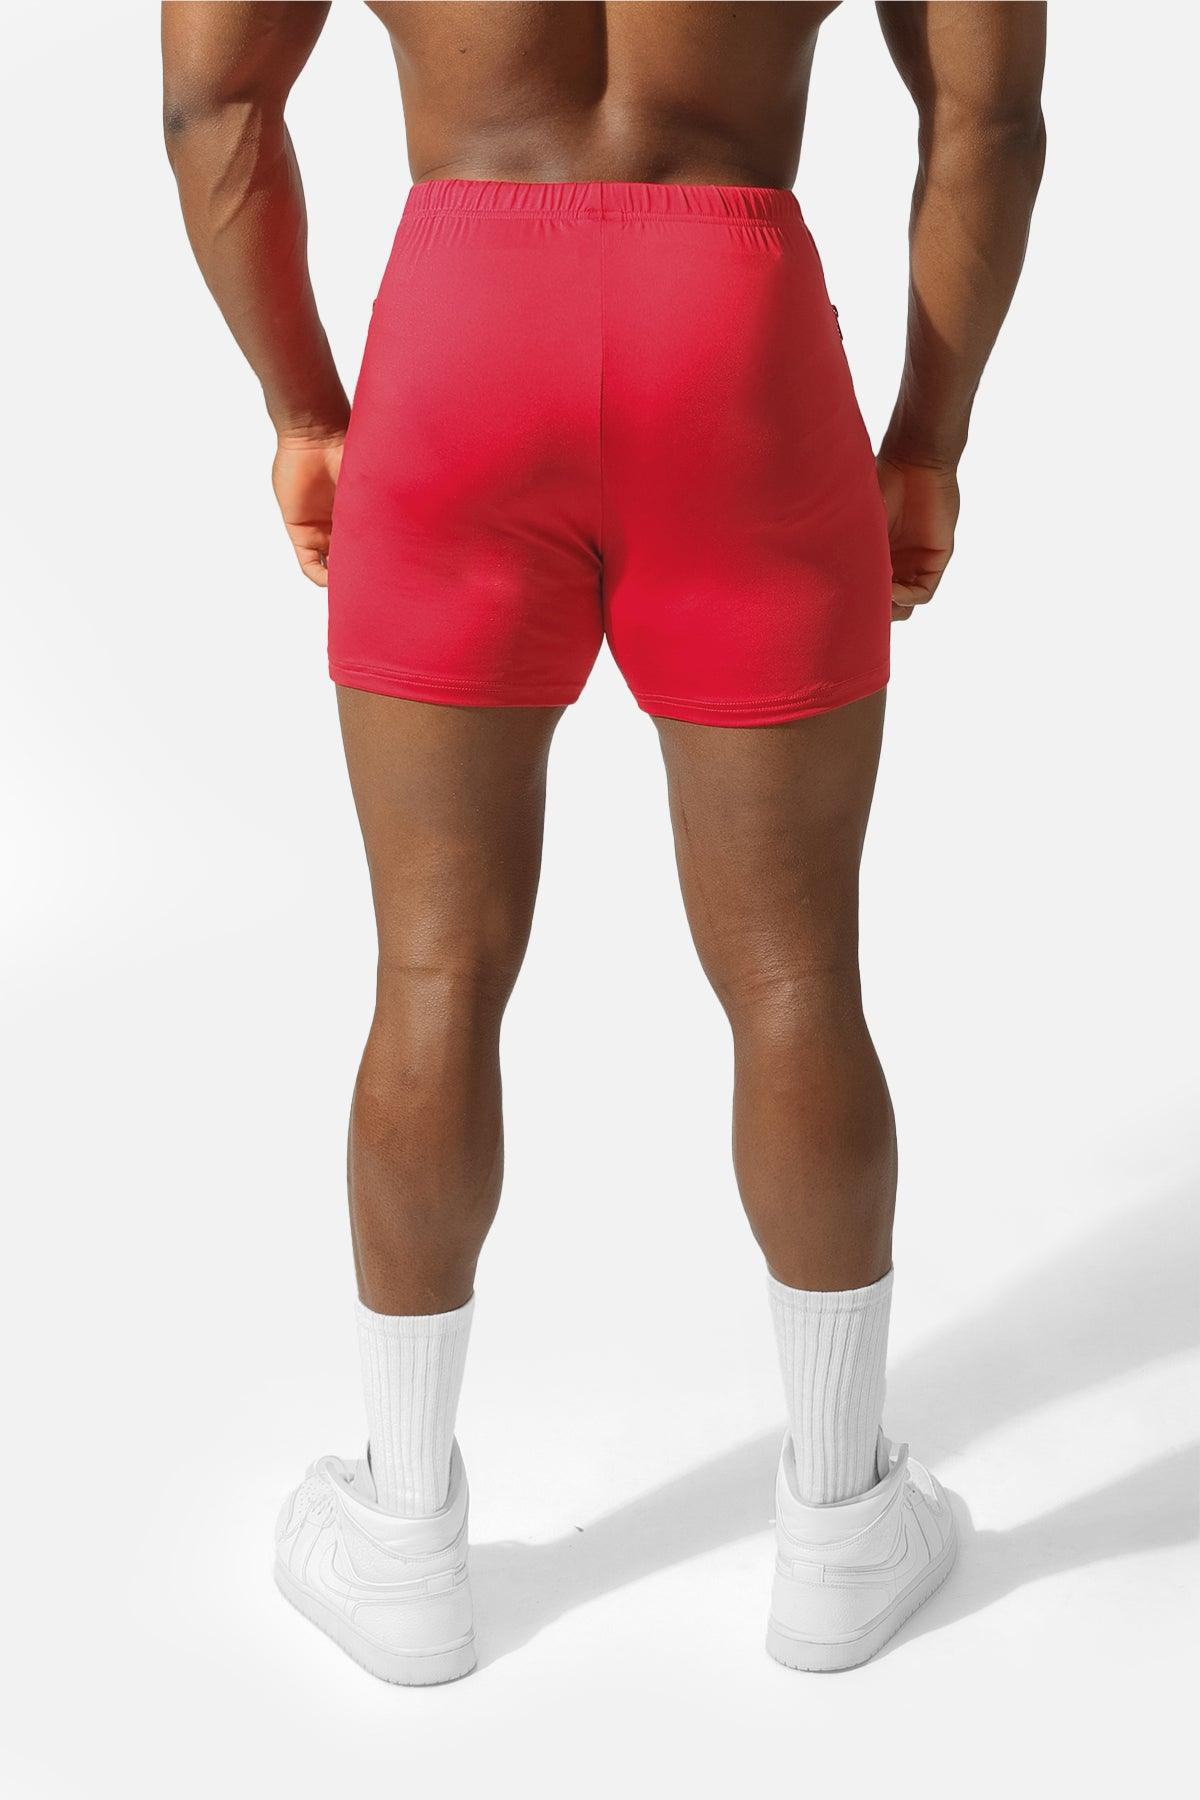 Agile Bodybuilding 4'' Shorts w Zipper Pockets - Tiger Red - Jed North